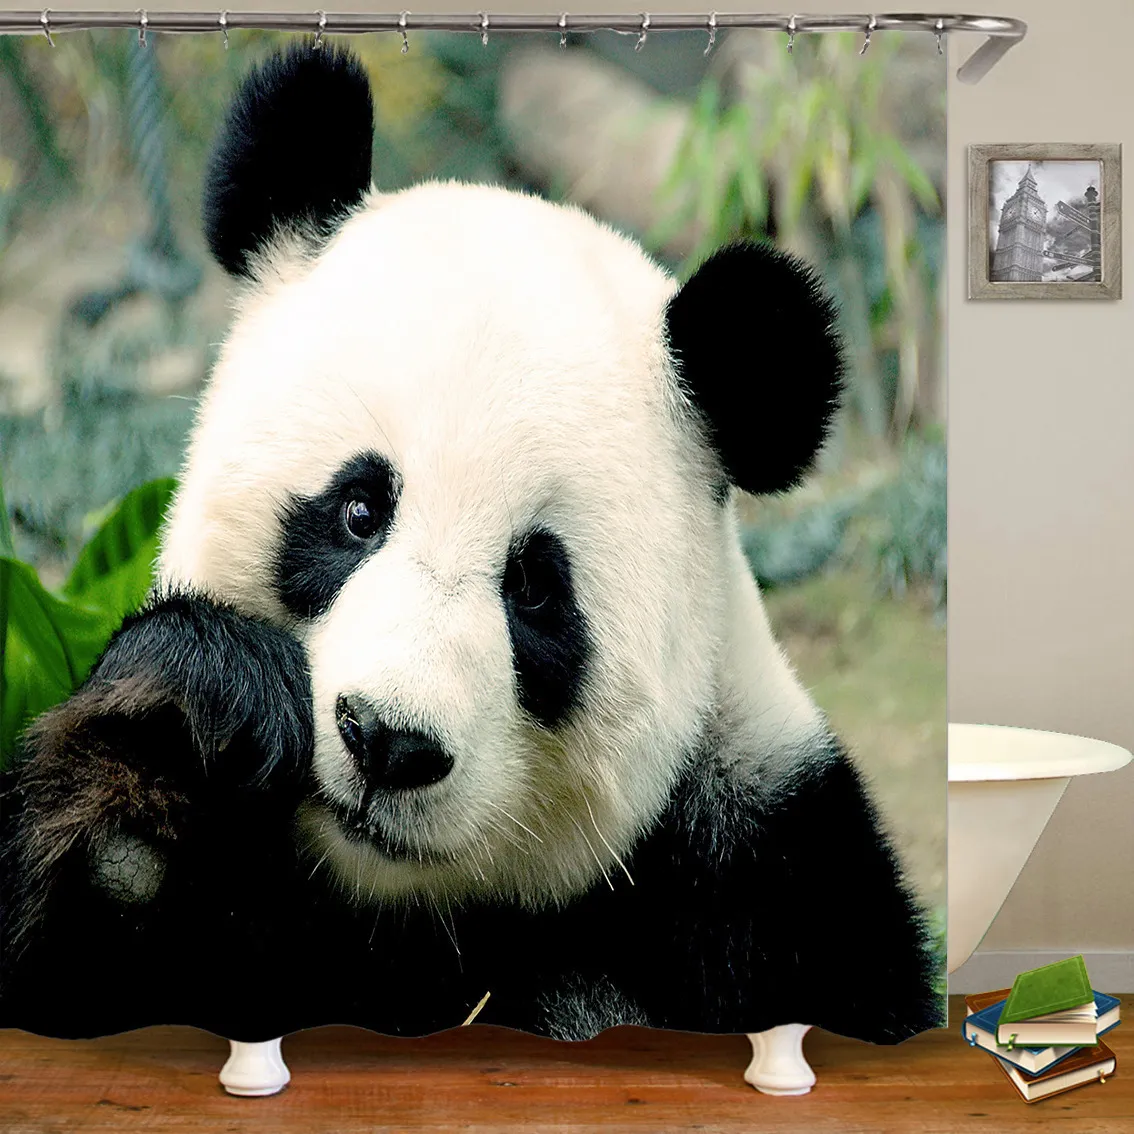 YIMING 200x180cm Badezimmer Wasserdichter Duschvorhang China 3D Panda Muster Polyester Waschbarer Vorhang mit Haken 201127